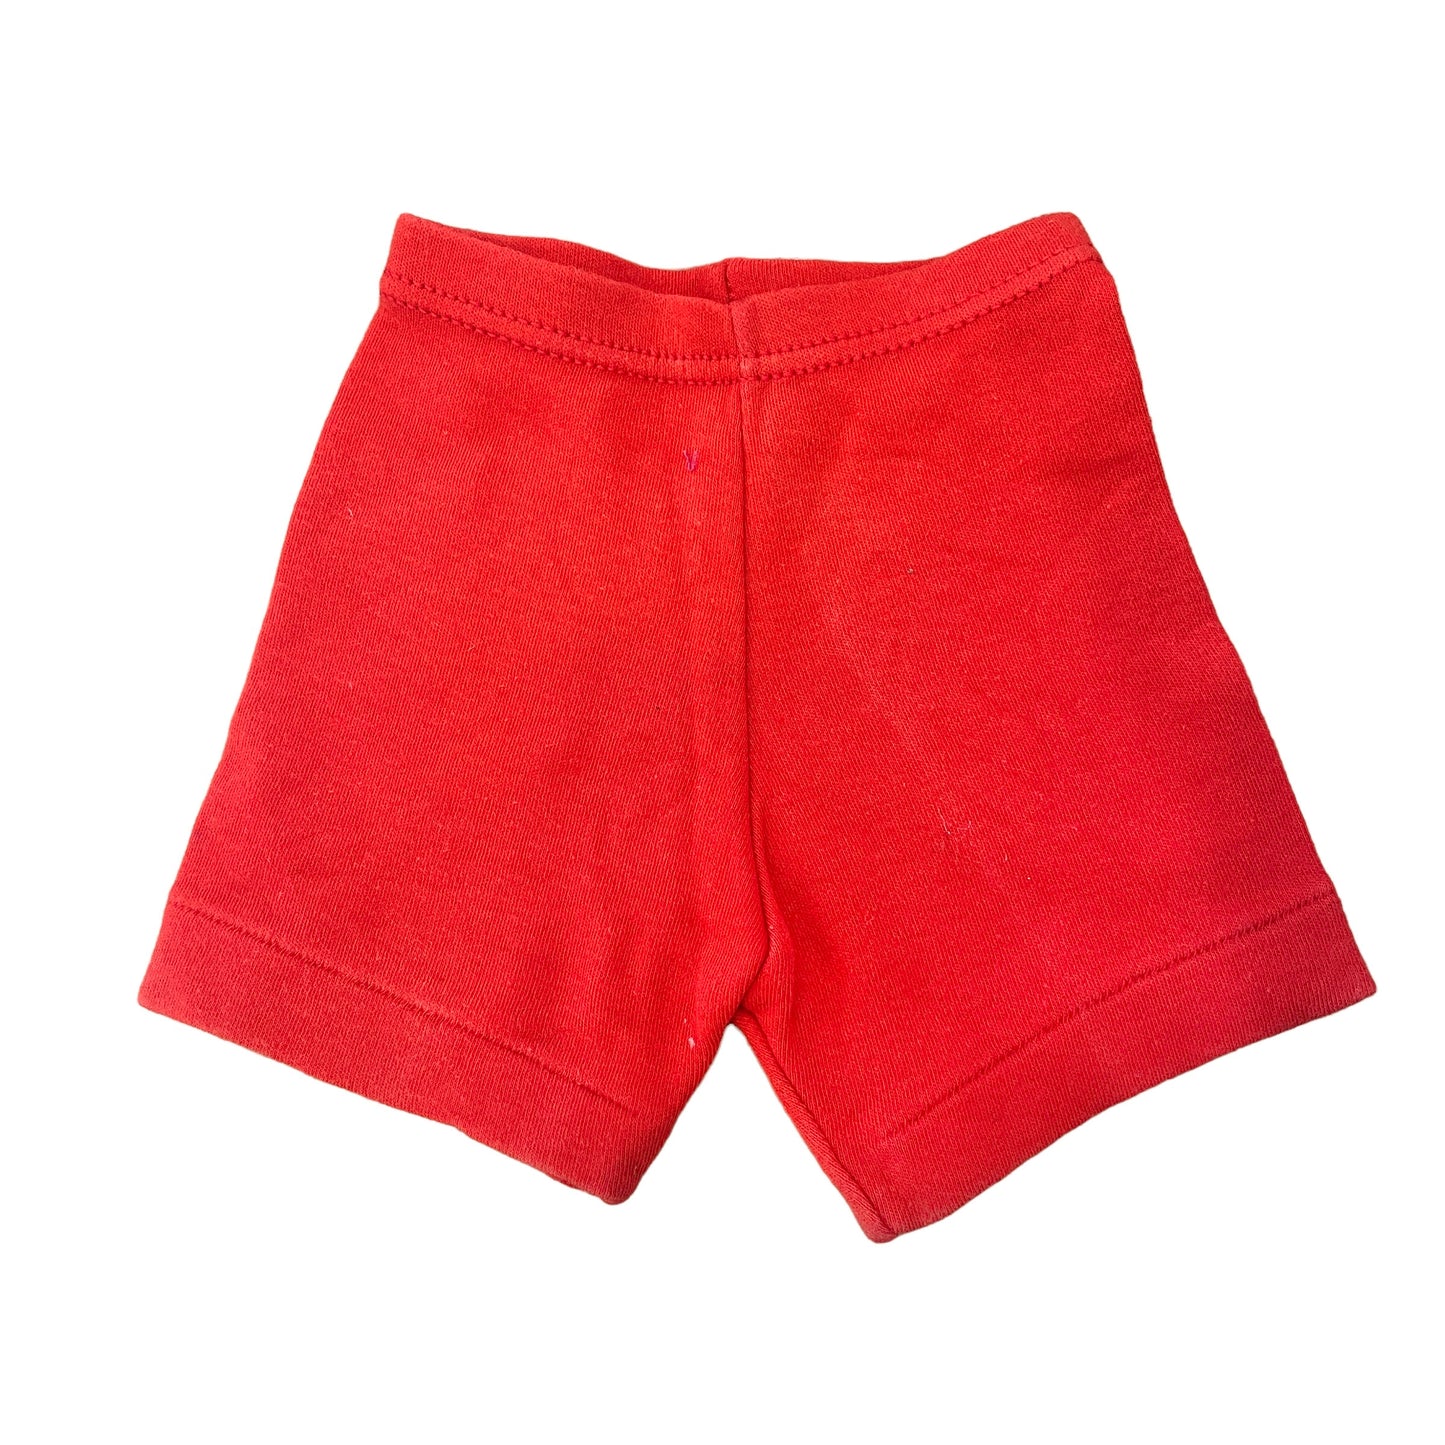 Vintage 70's  Red / Cotton Shorts  / Pants / Underwear 0-3M